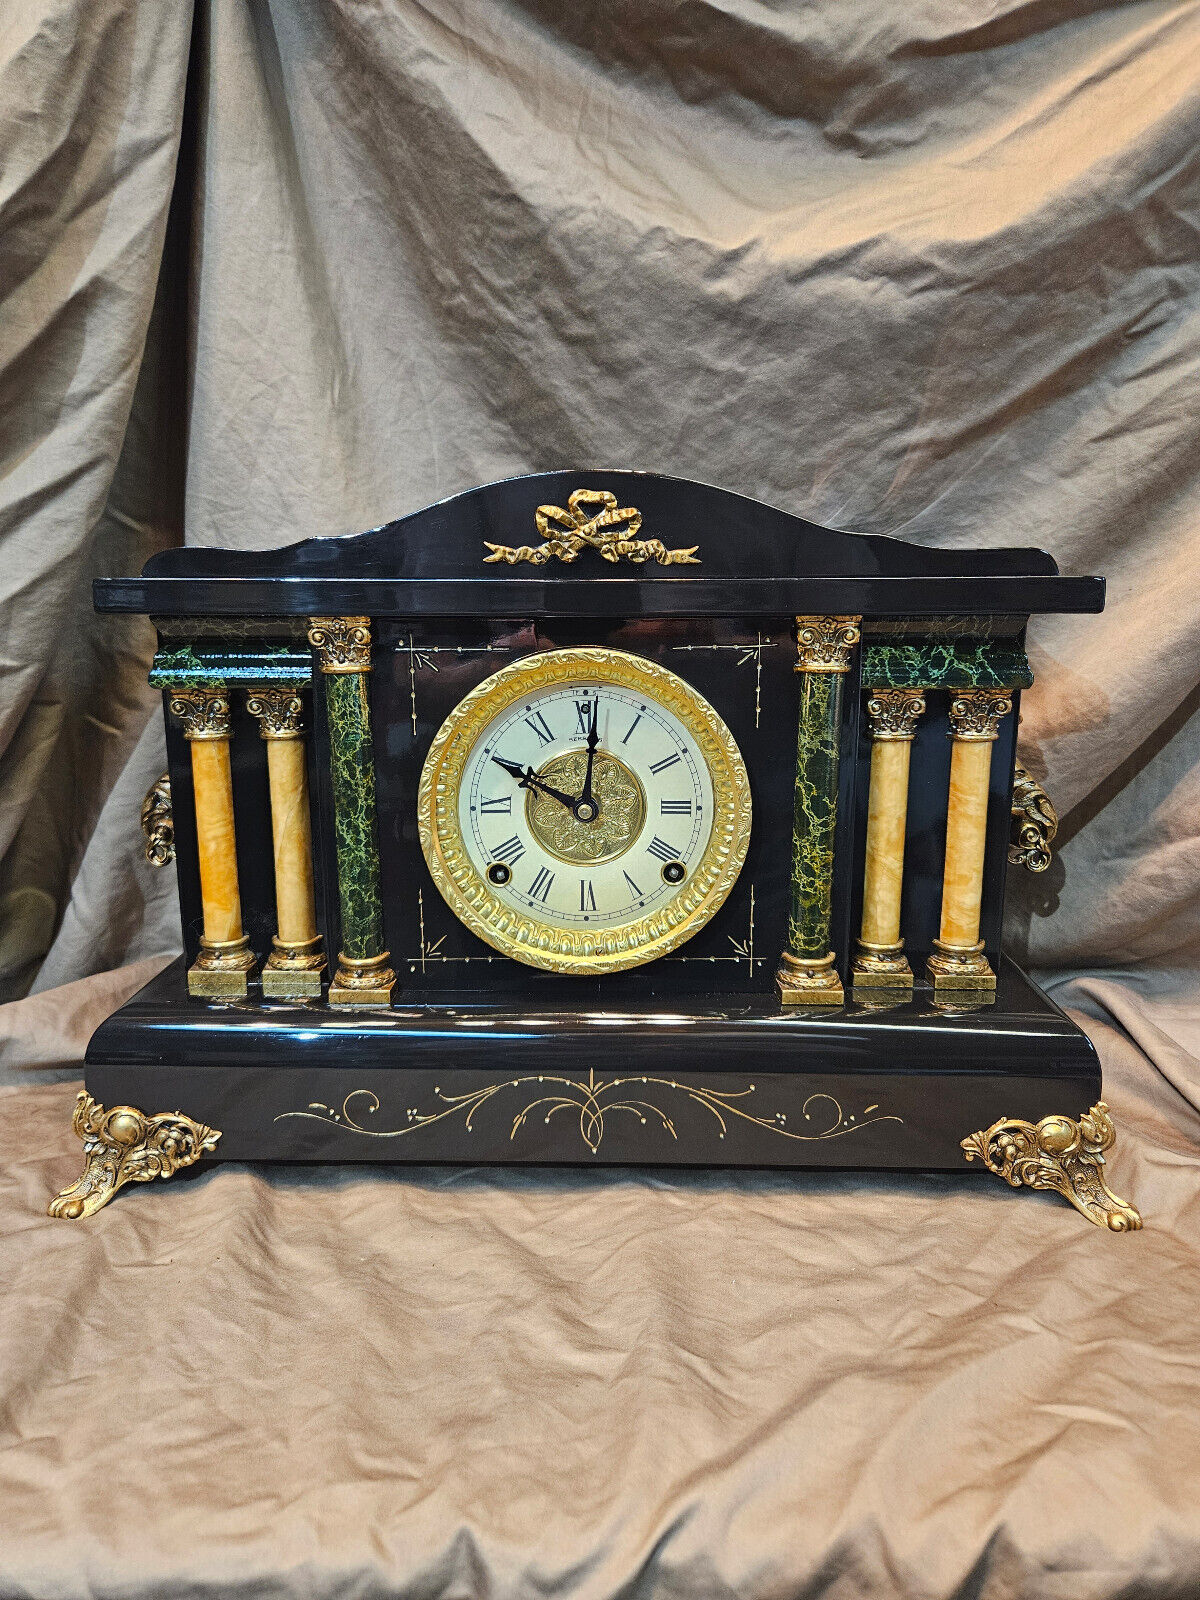 Restored Antique Sessions Mantel Clock circa 1910 Original Movement